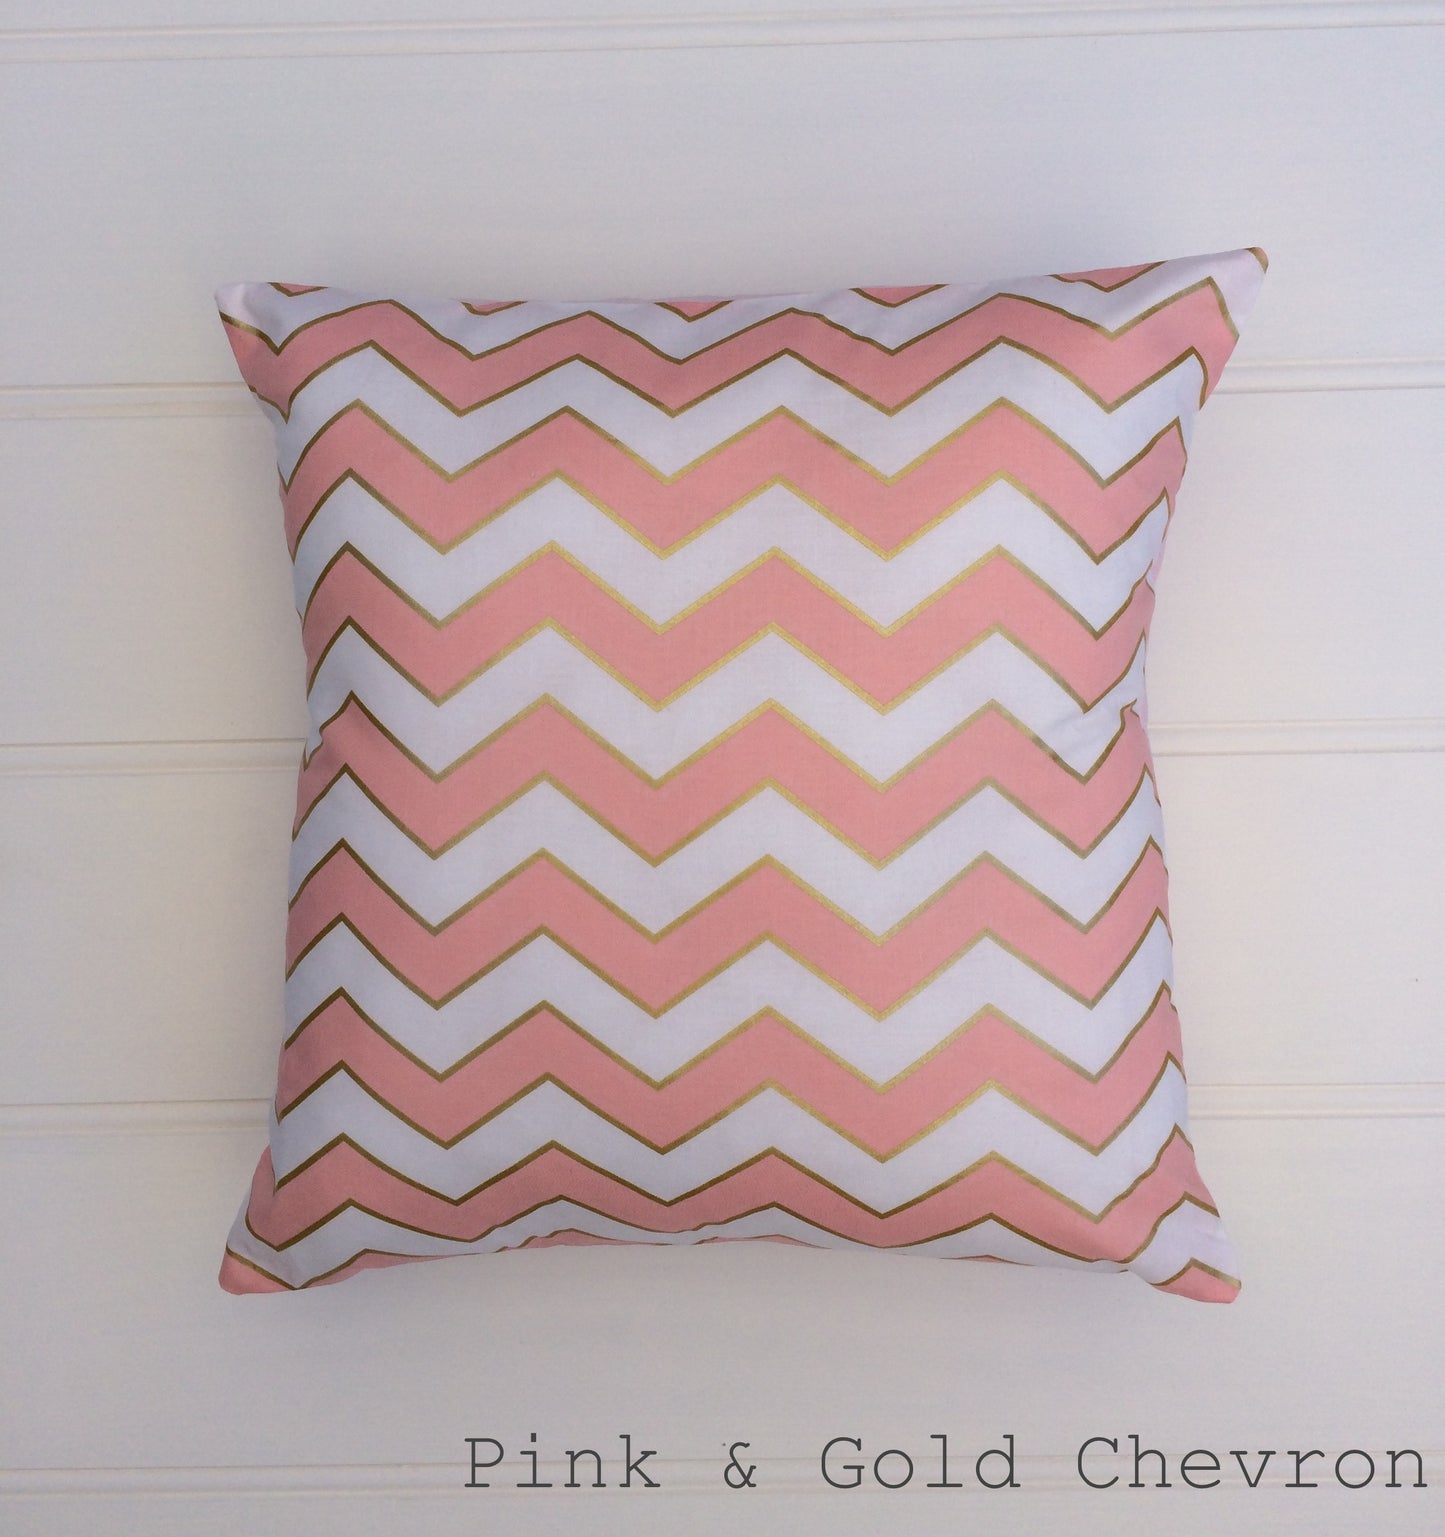 Pink & Gold Chevron Cushion Cover